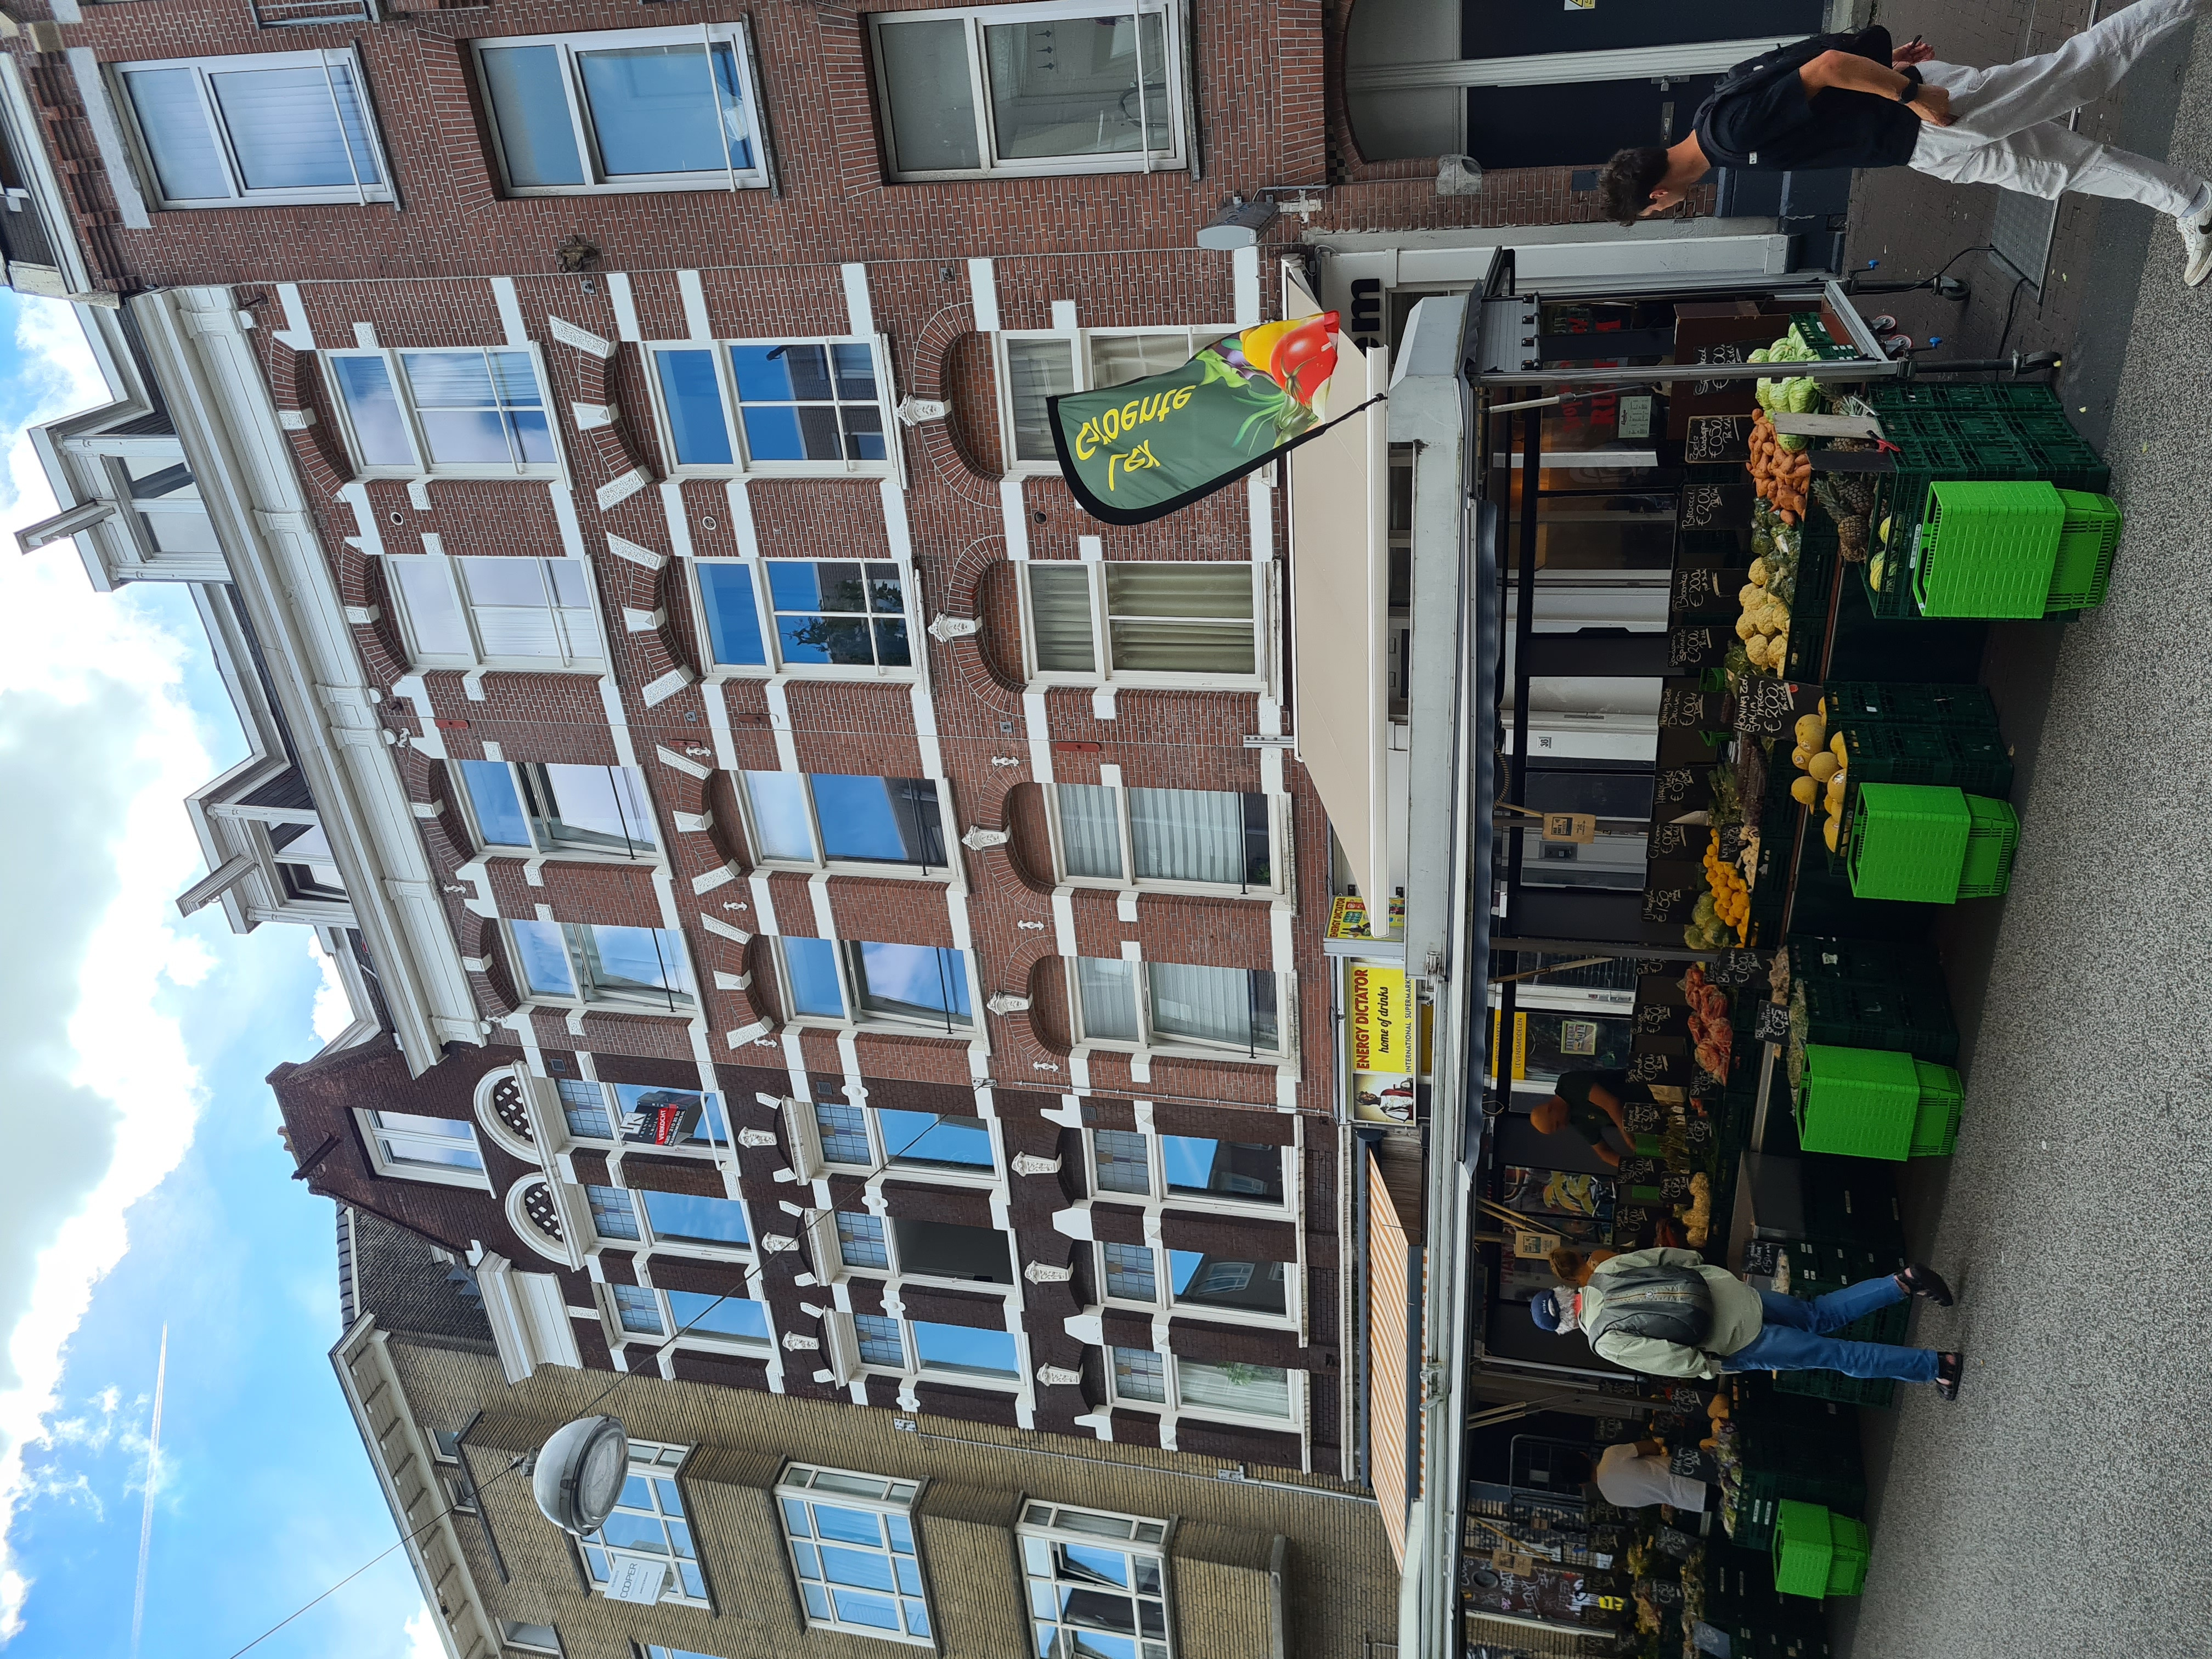 Ten Katestraat 36 2, Amsterdam